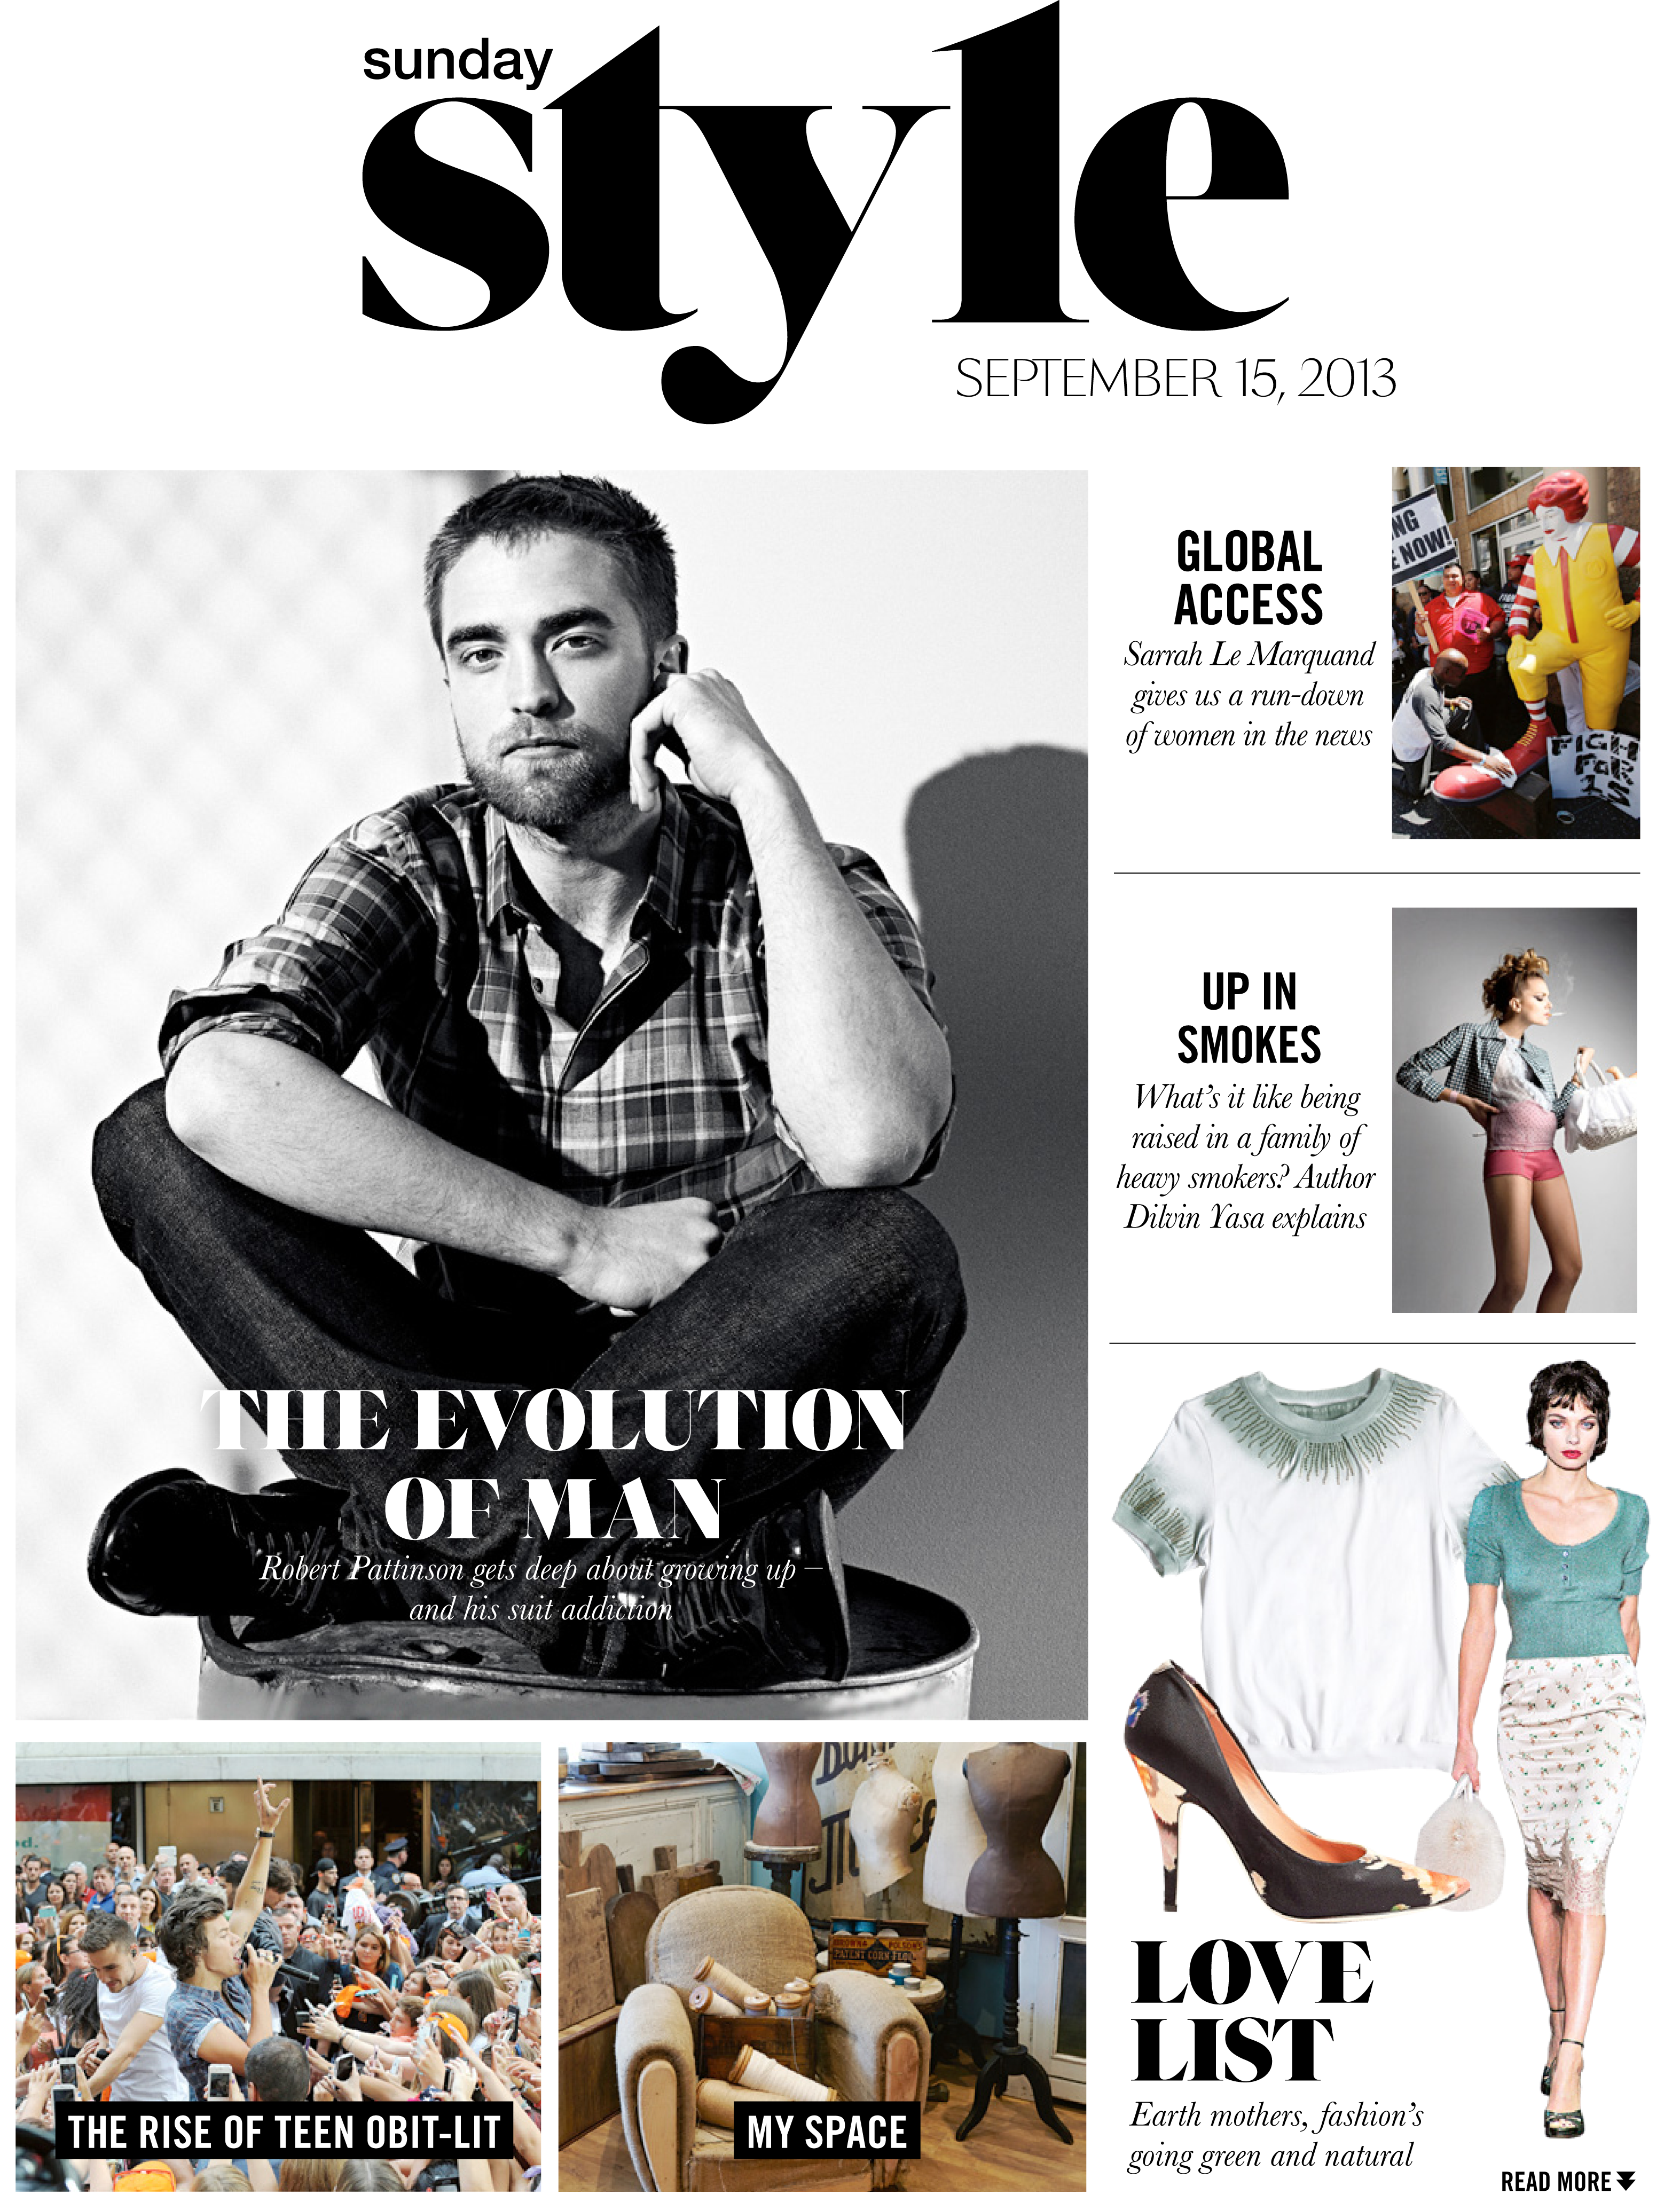 Robert Pattinson Australia » Blog Archive » DiorRob: Sunday Style HQ ...